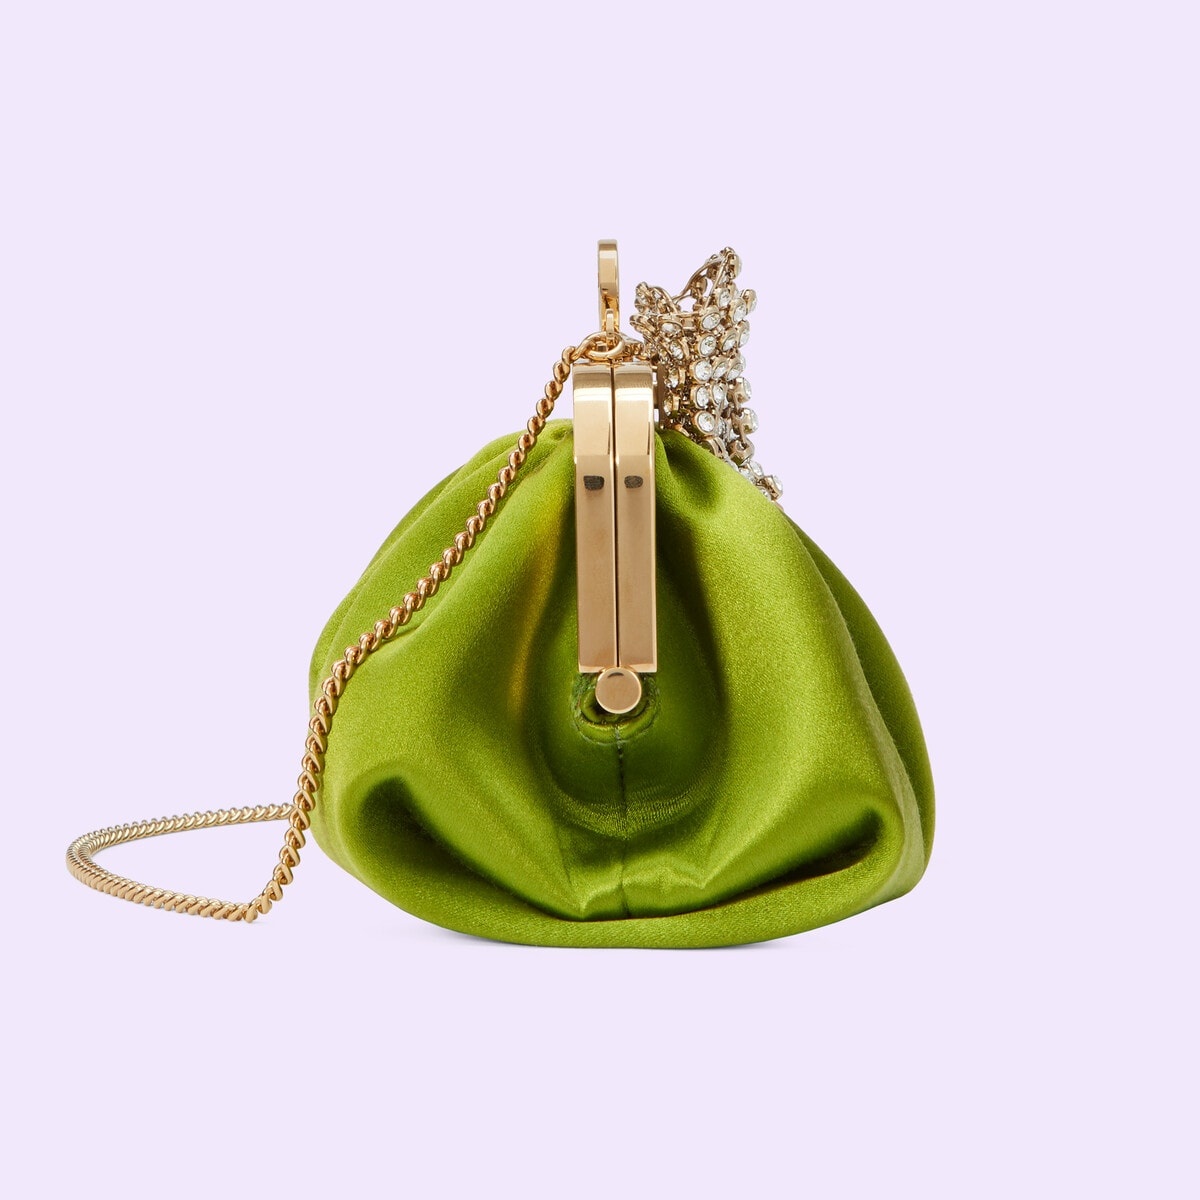 Satin handbag with bow - 5